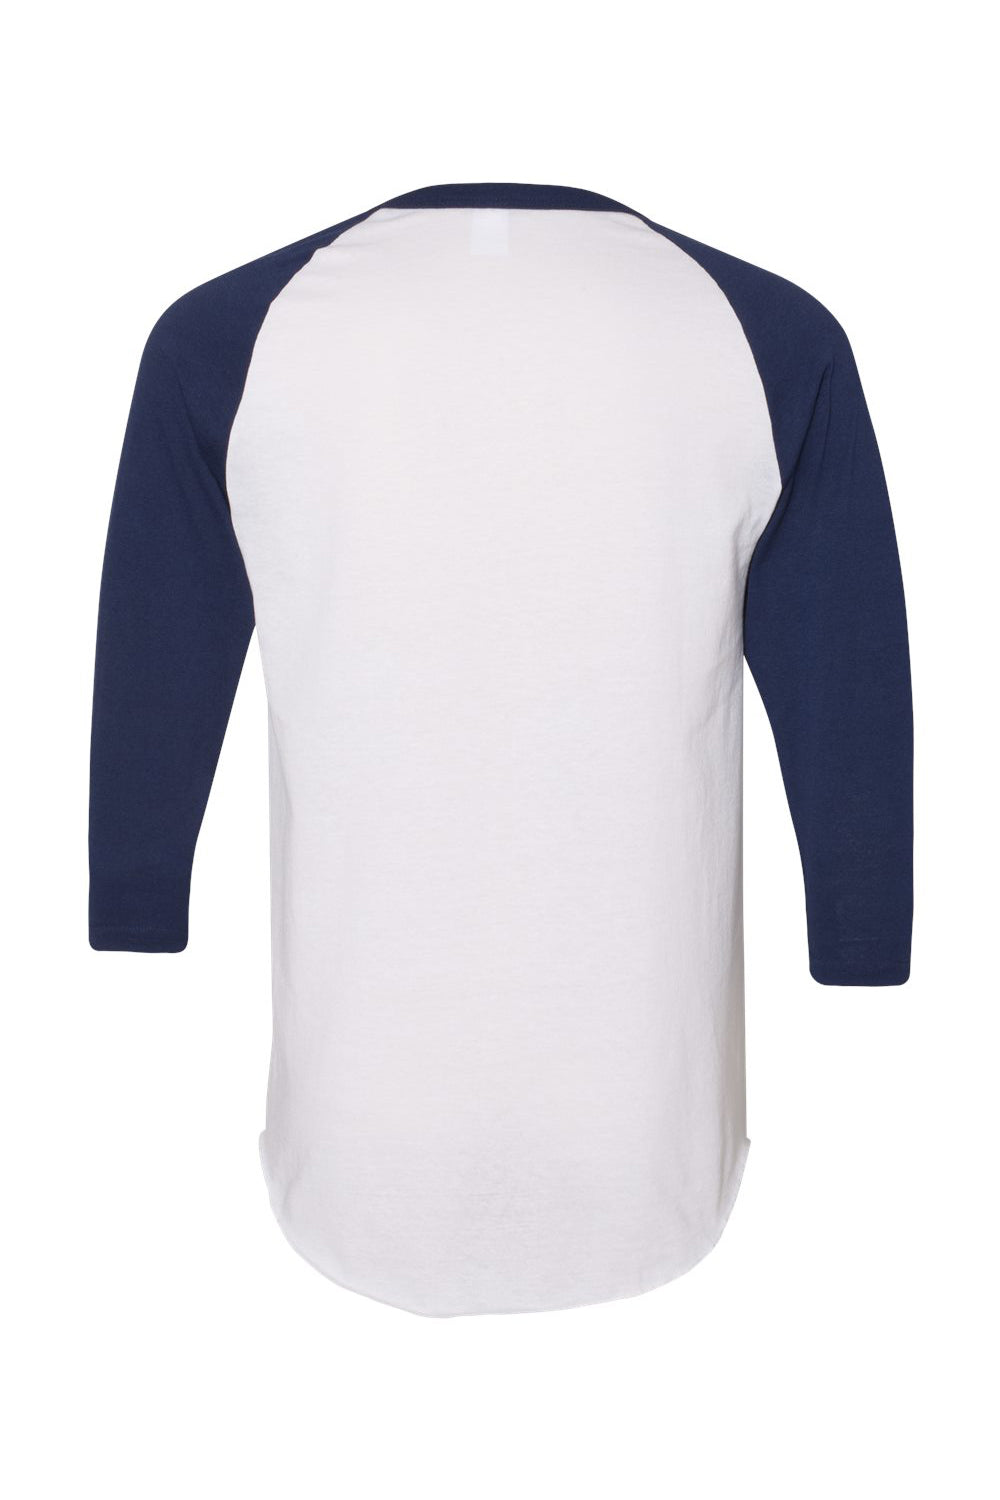 Augusta Sportswear 4420 Mens Raglan 3/4 Sleeve Crewneck T-Shirt White/Navy Blue Flat Back